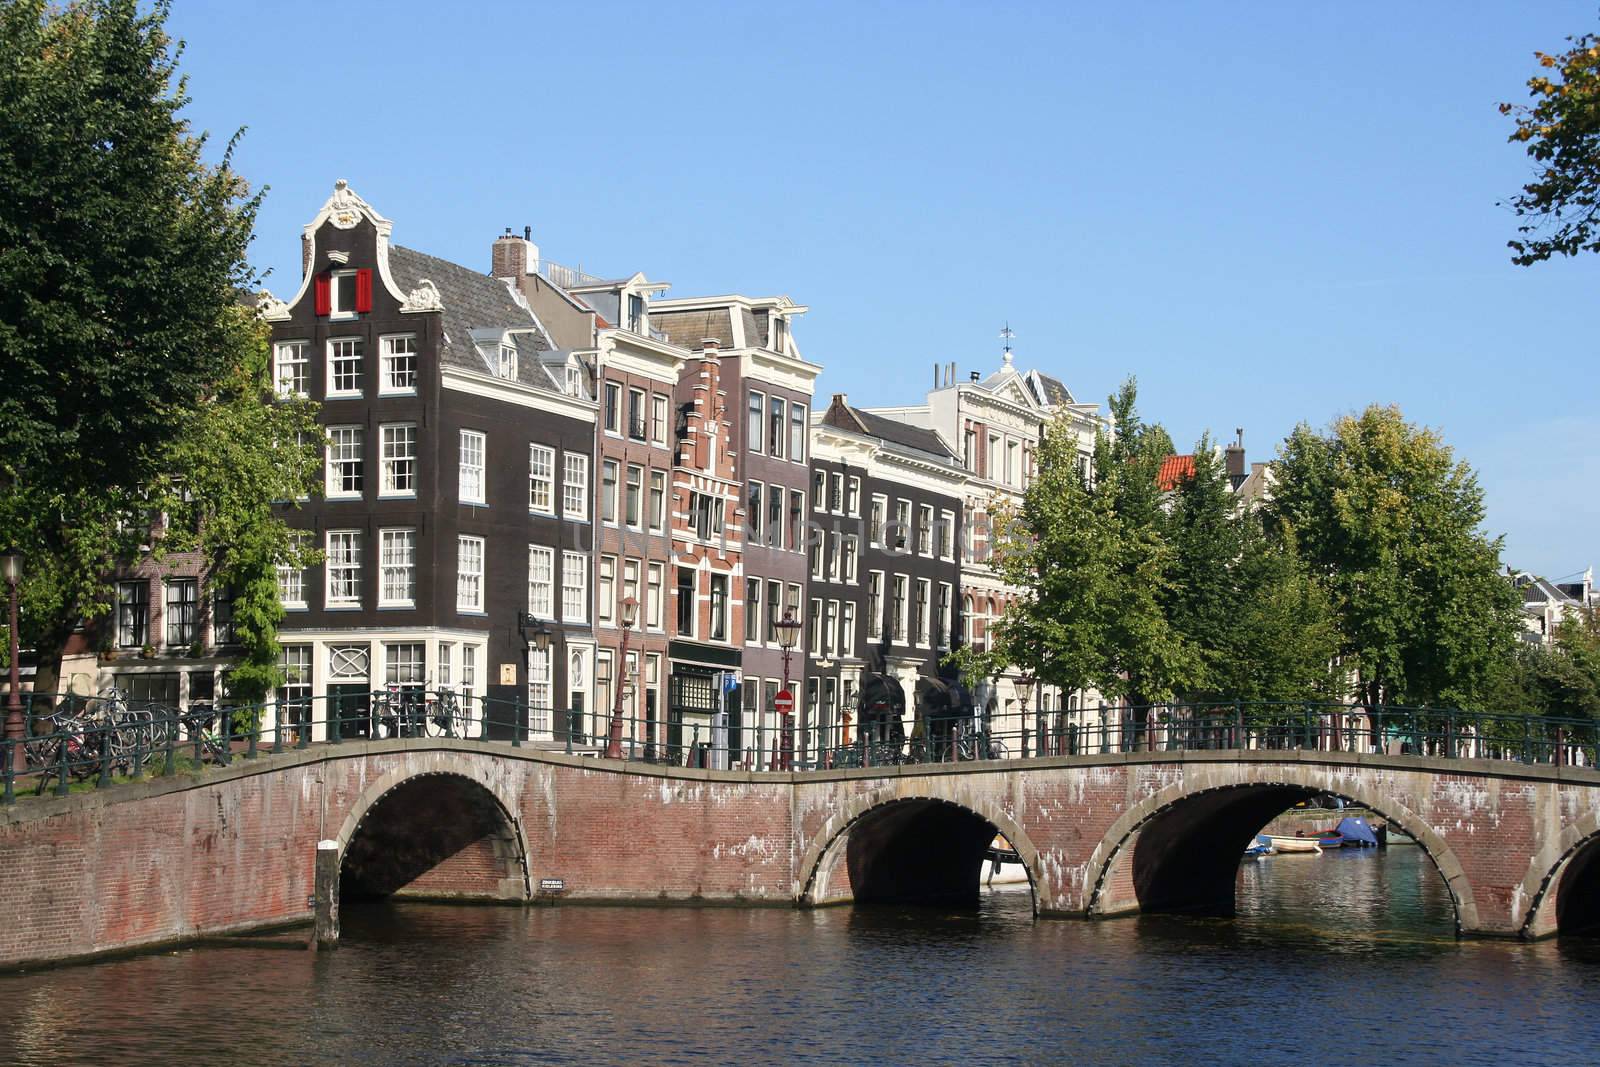 Bridge in Amsterdam, Holland by JanKranendonk